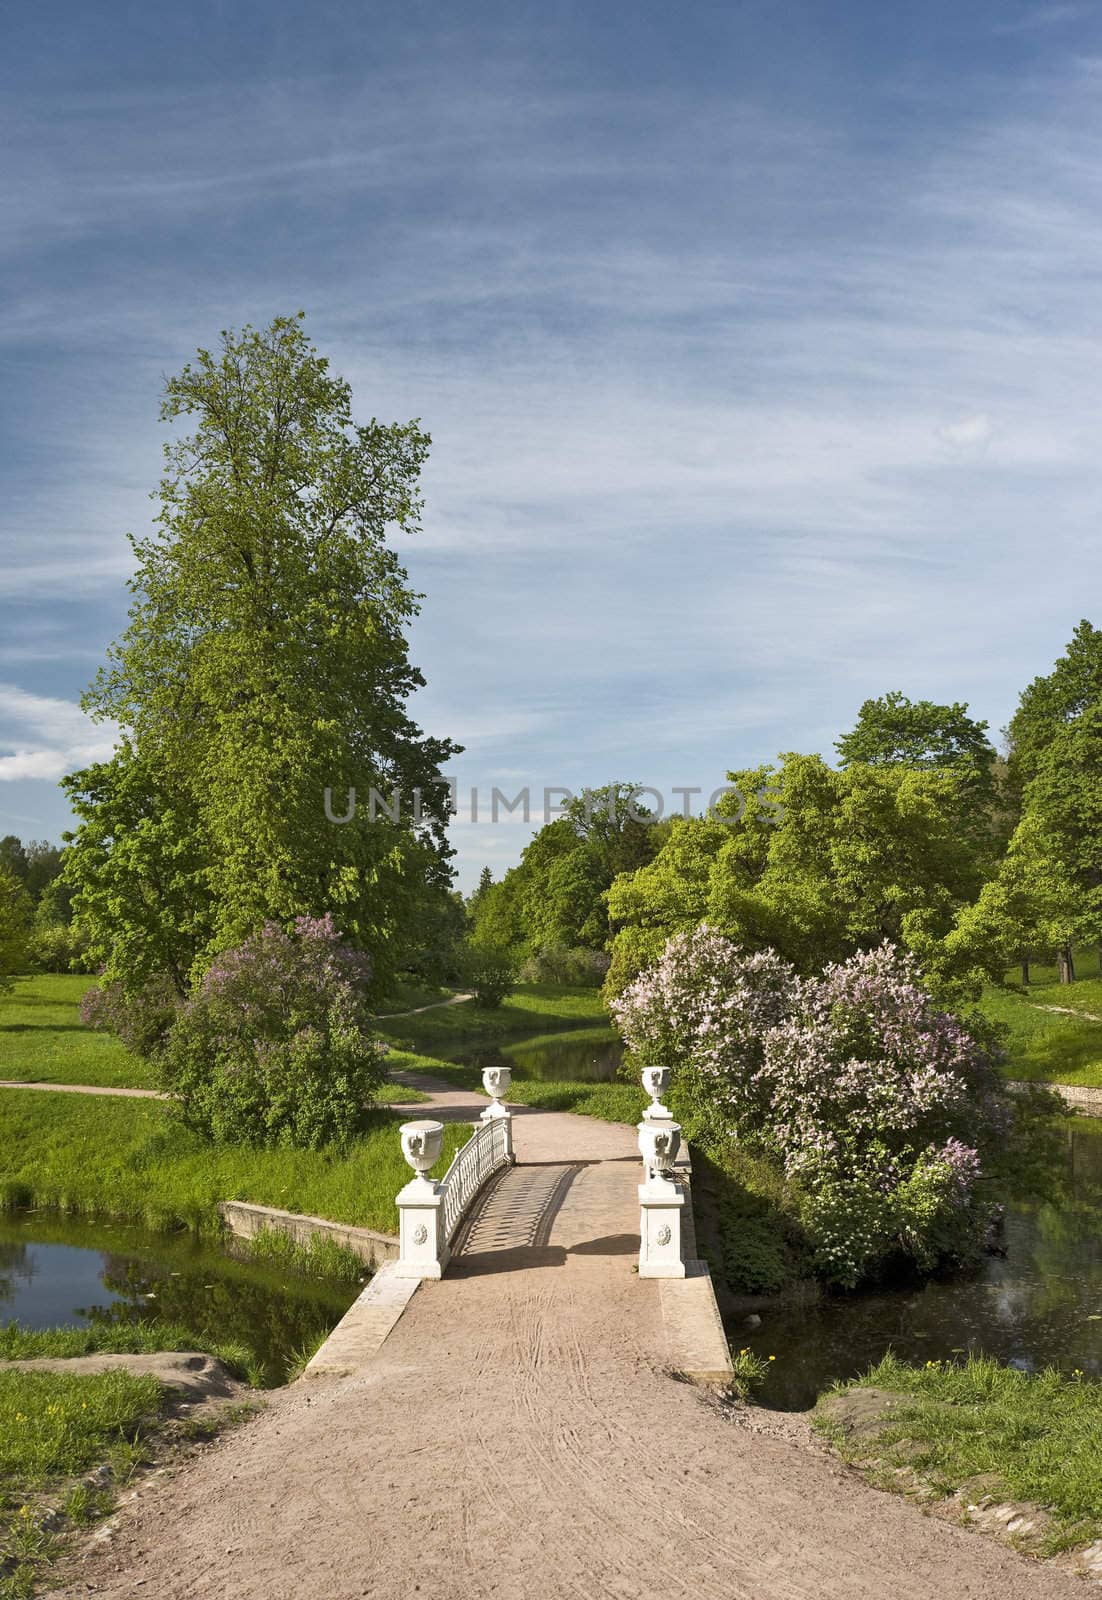 Bridge in the park by mulden